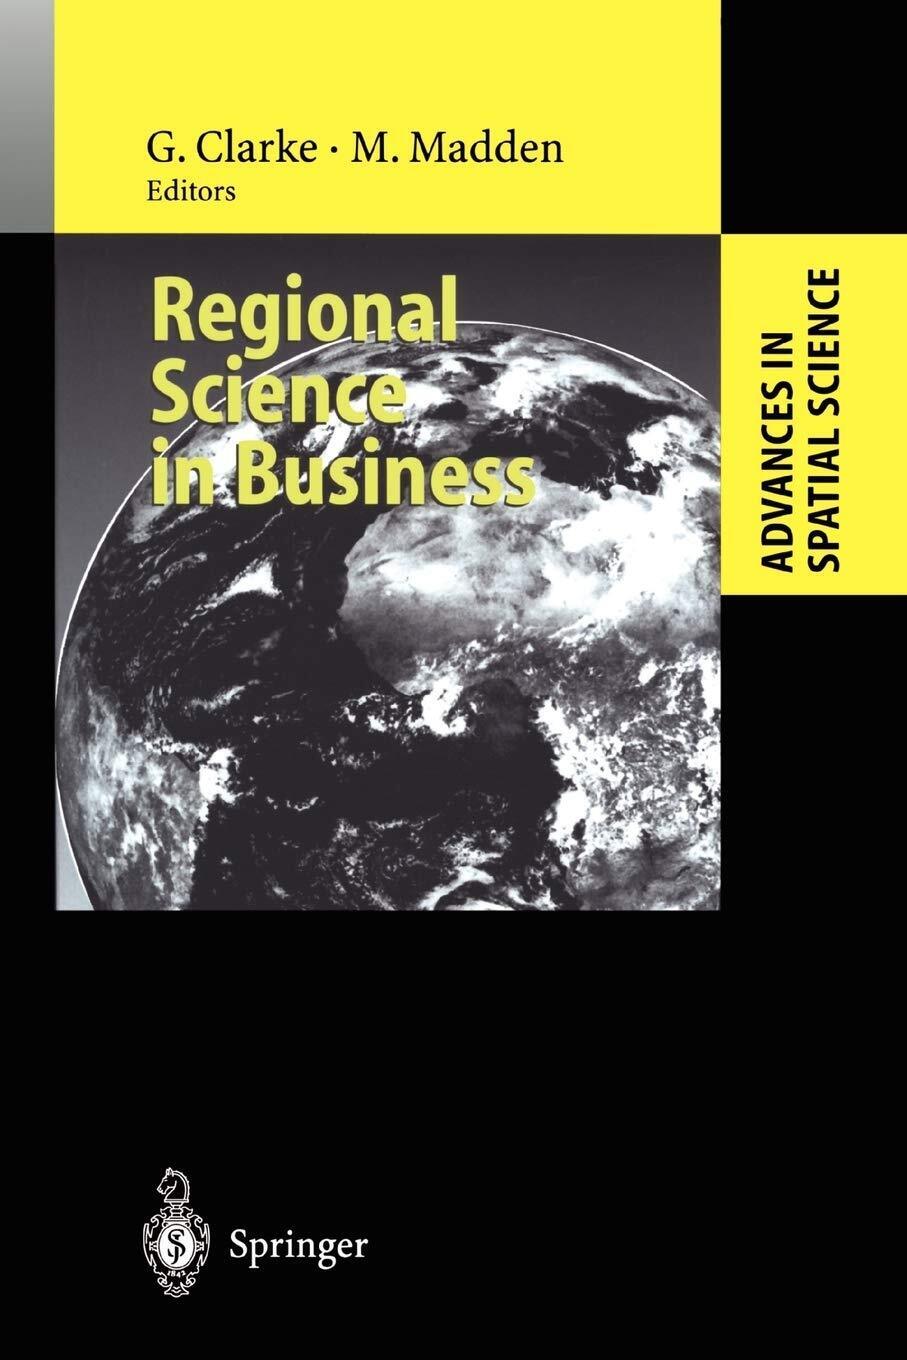 Regional Science in Business - Graham Clarke - Springer, 2010